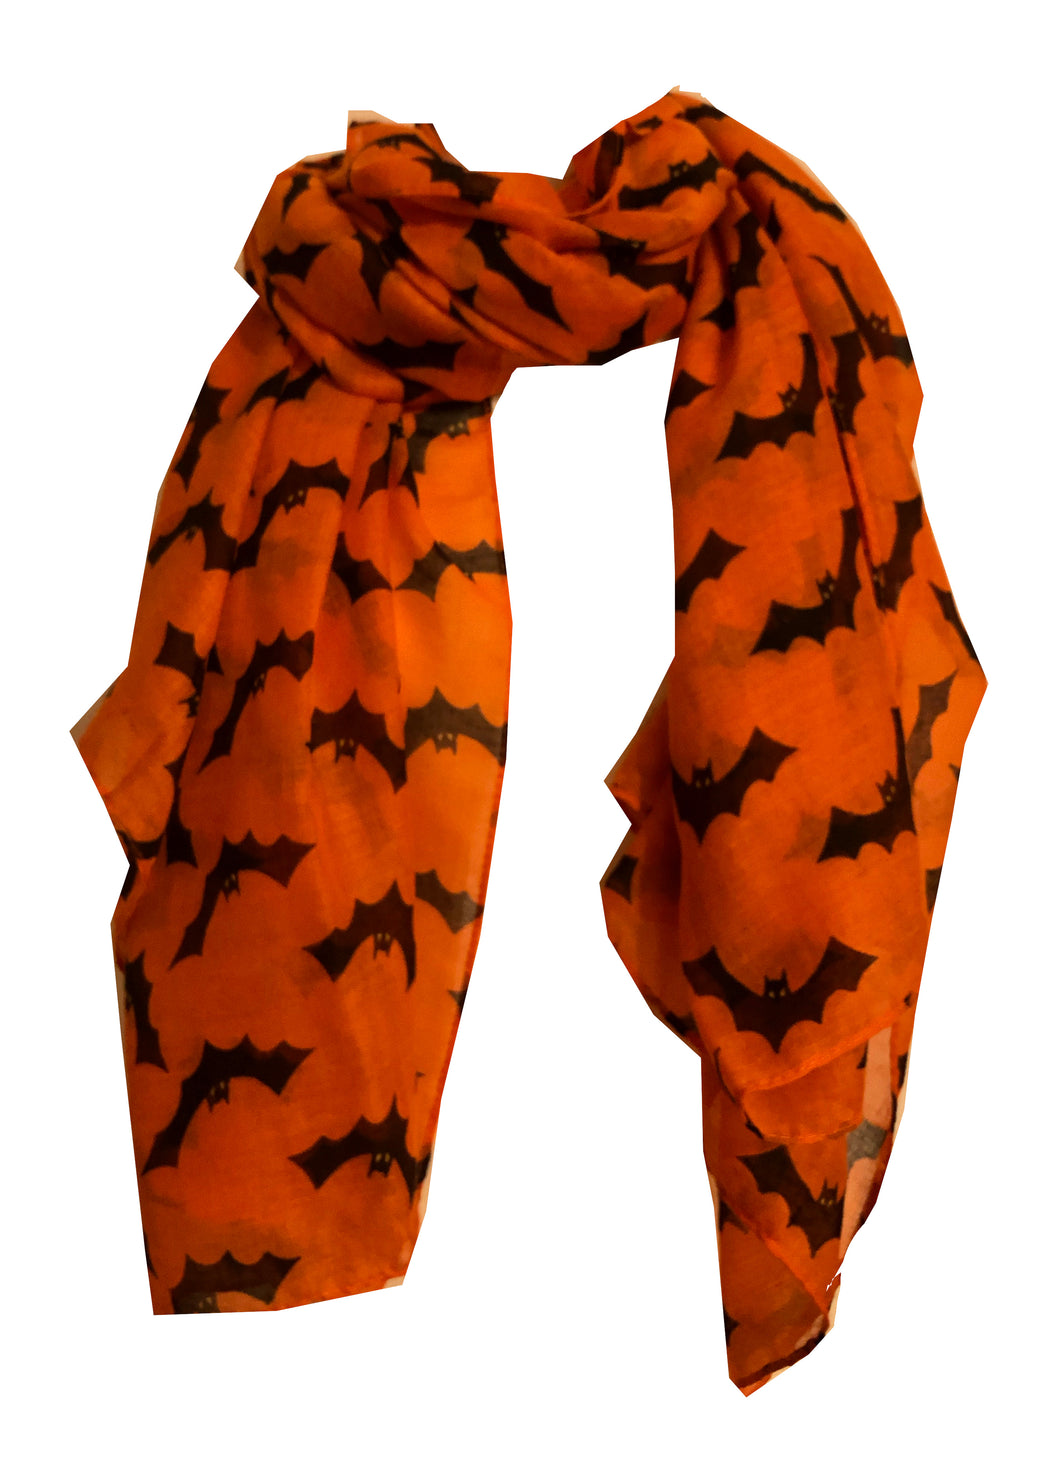 Halloween orange with black bats scarf/wrap